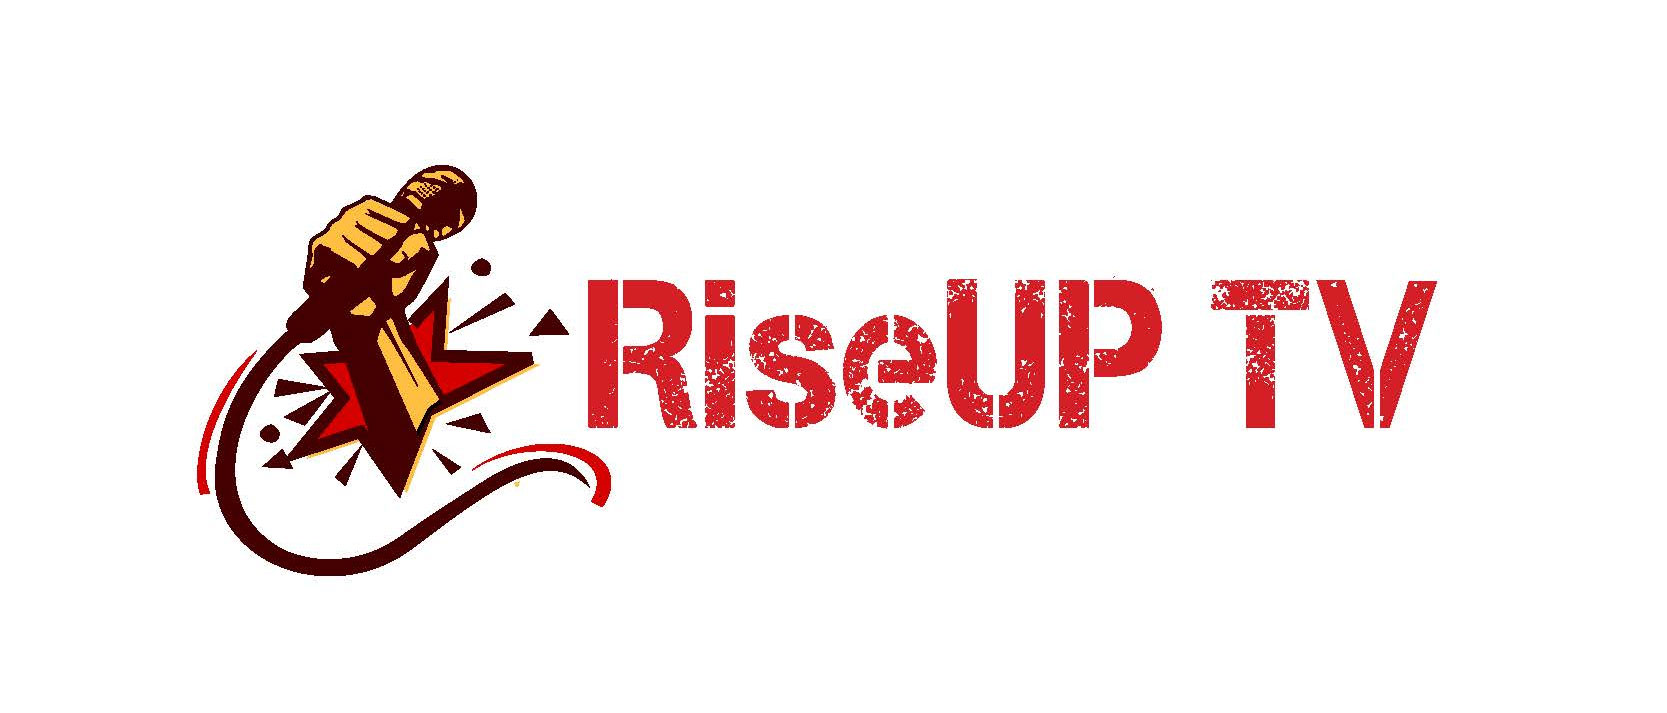 RiseUp TV Tour (Baltimore, MD) FILMED FOR TV!